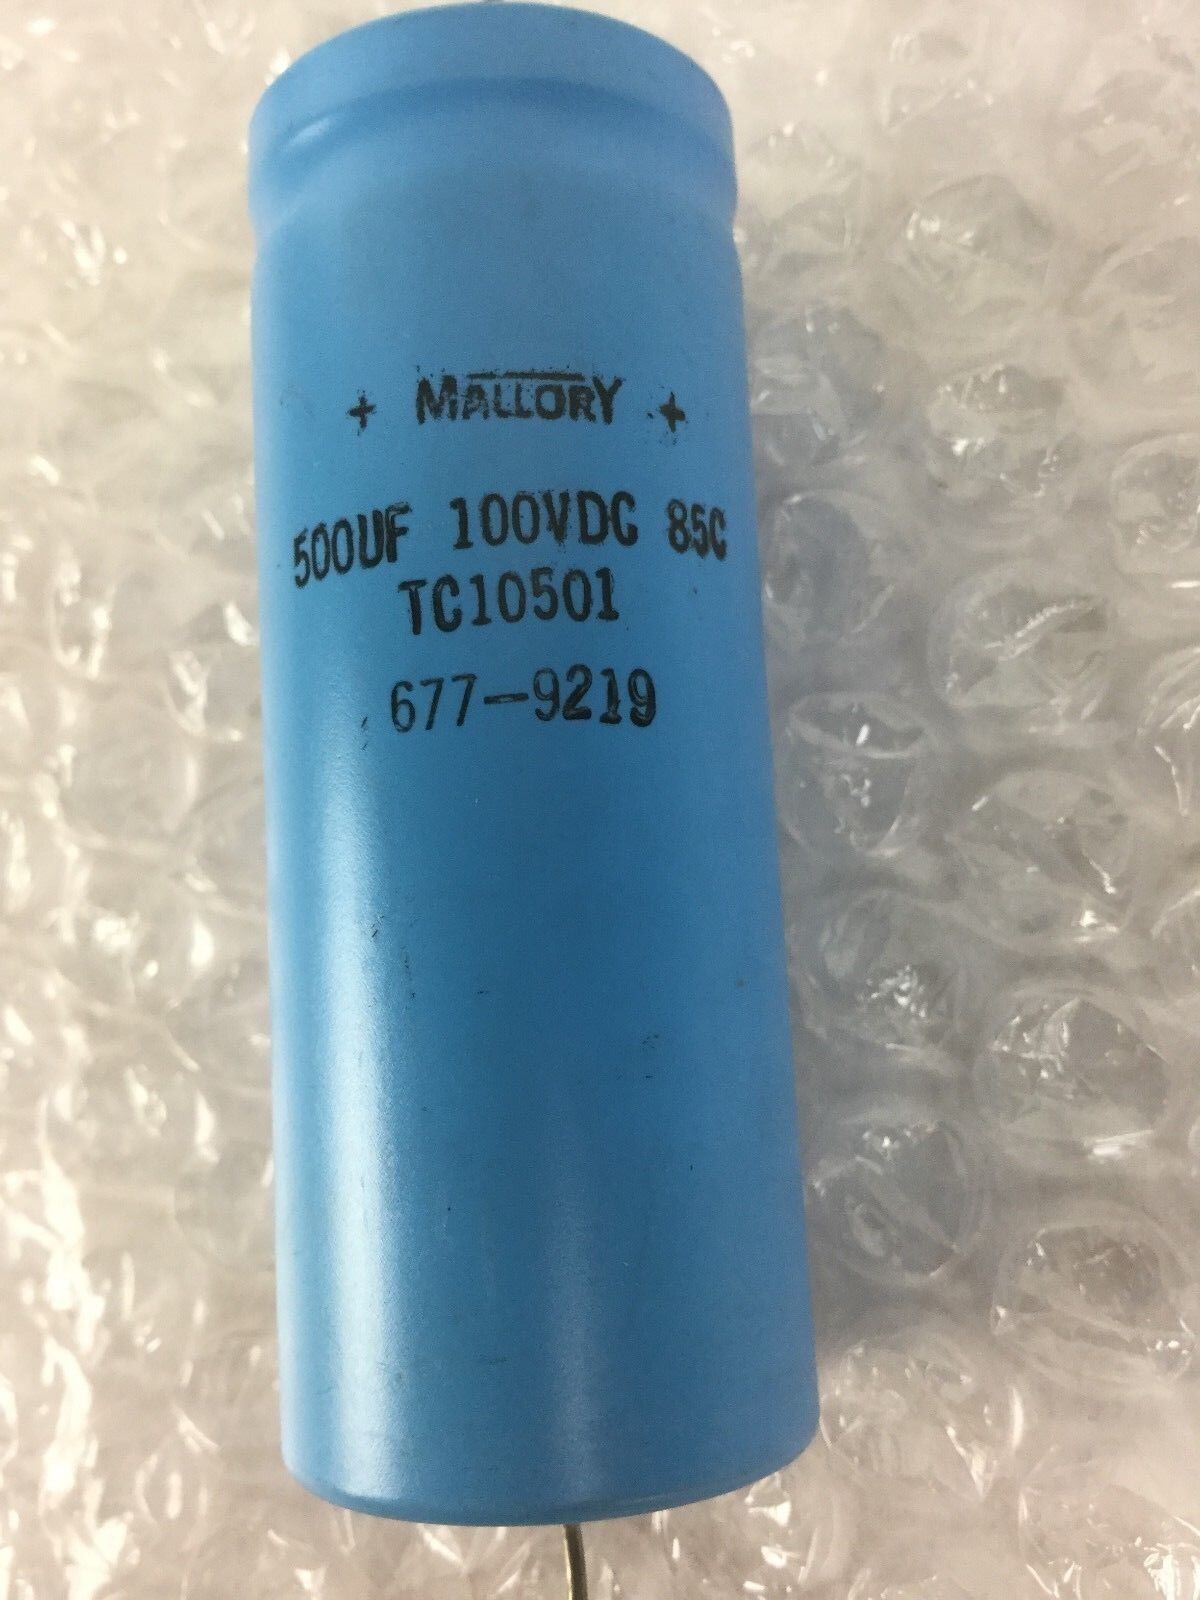 NEW Mallory TC10501 Electrolytic Capacitor 500UF 100VDC, 85C, NEW